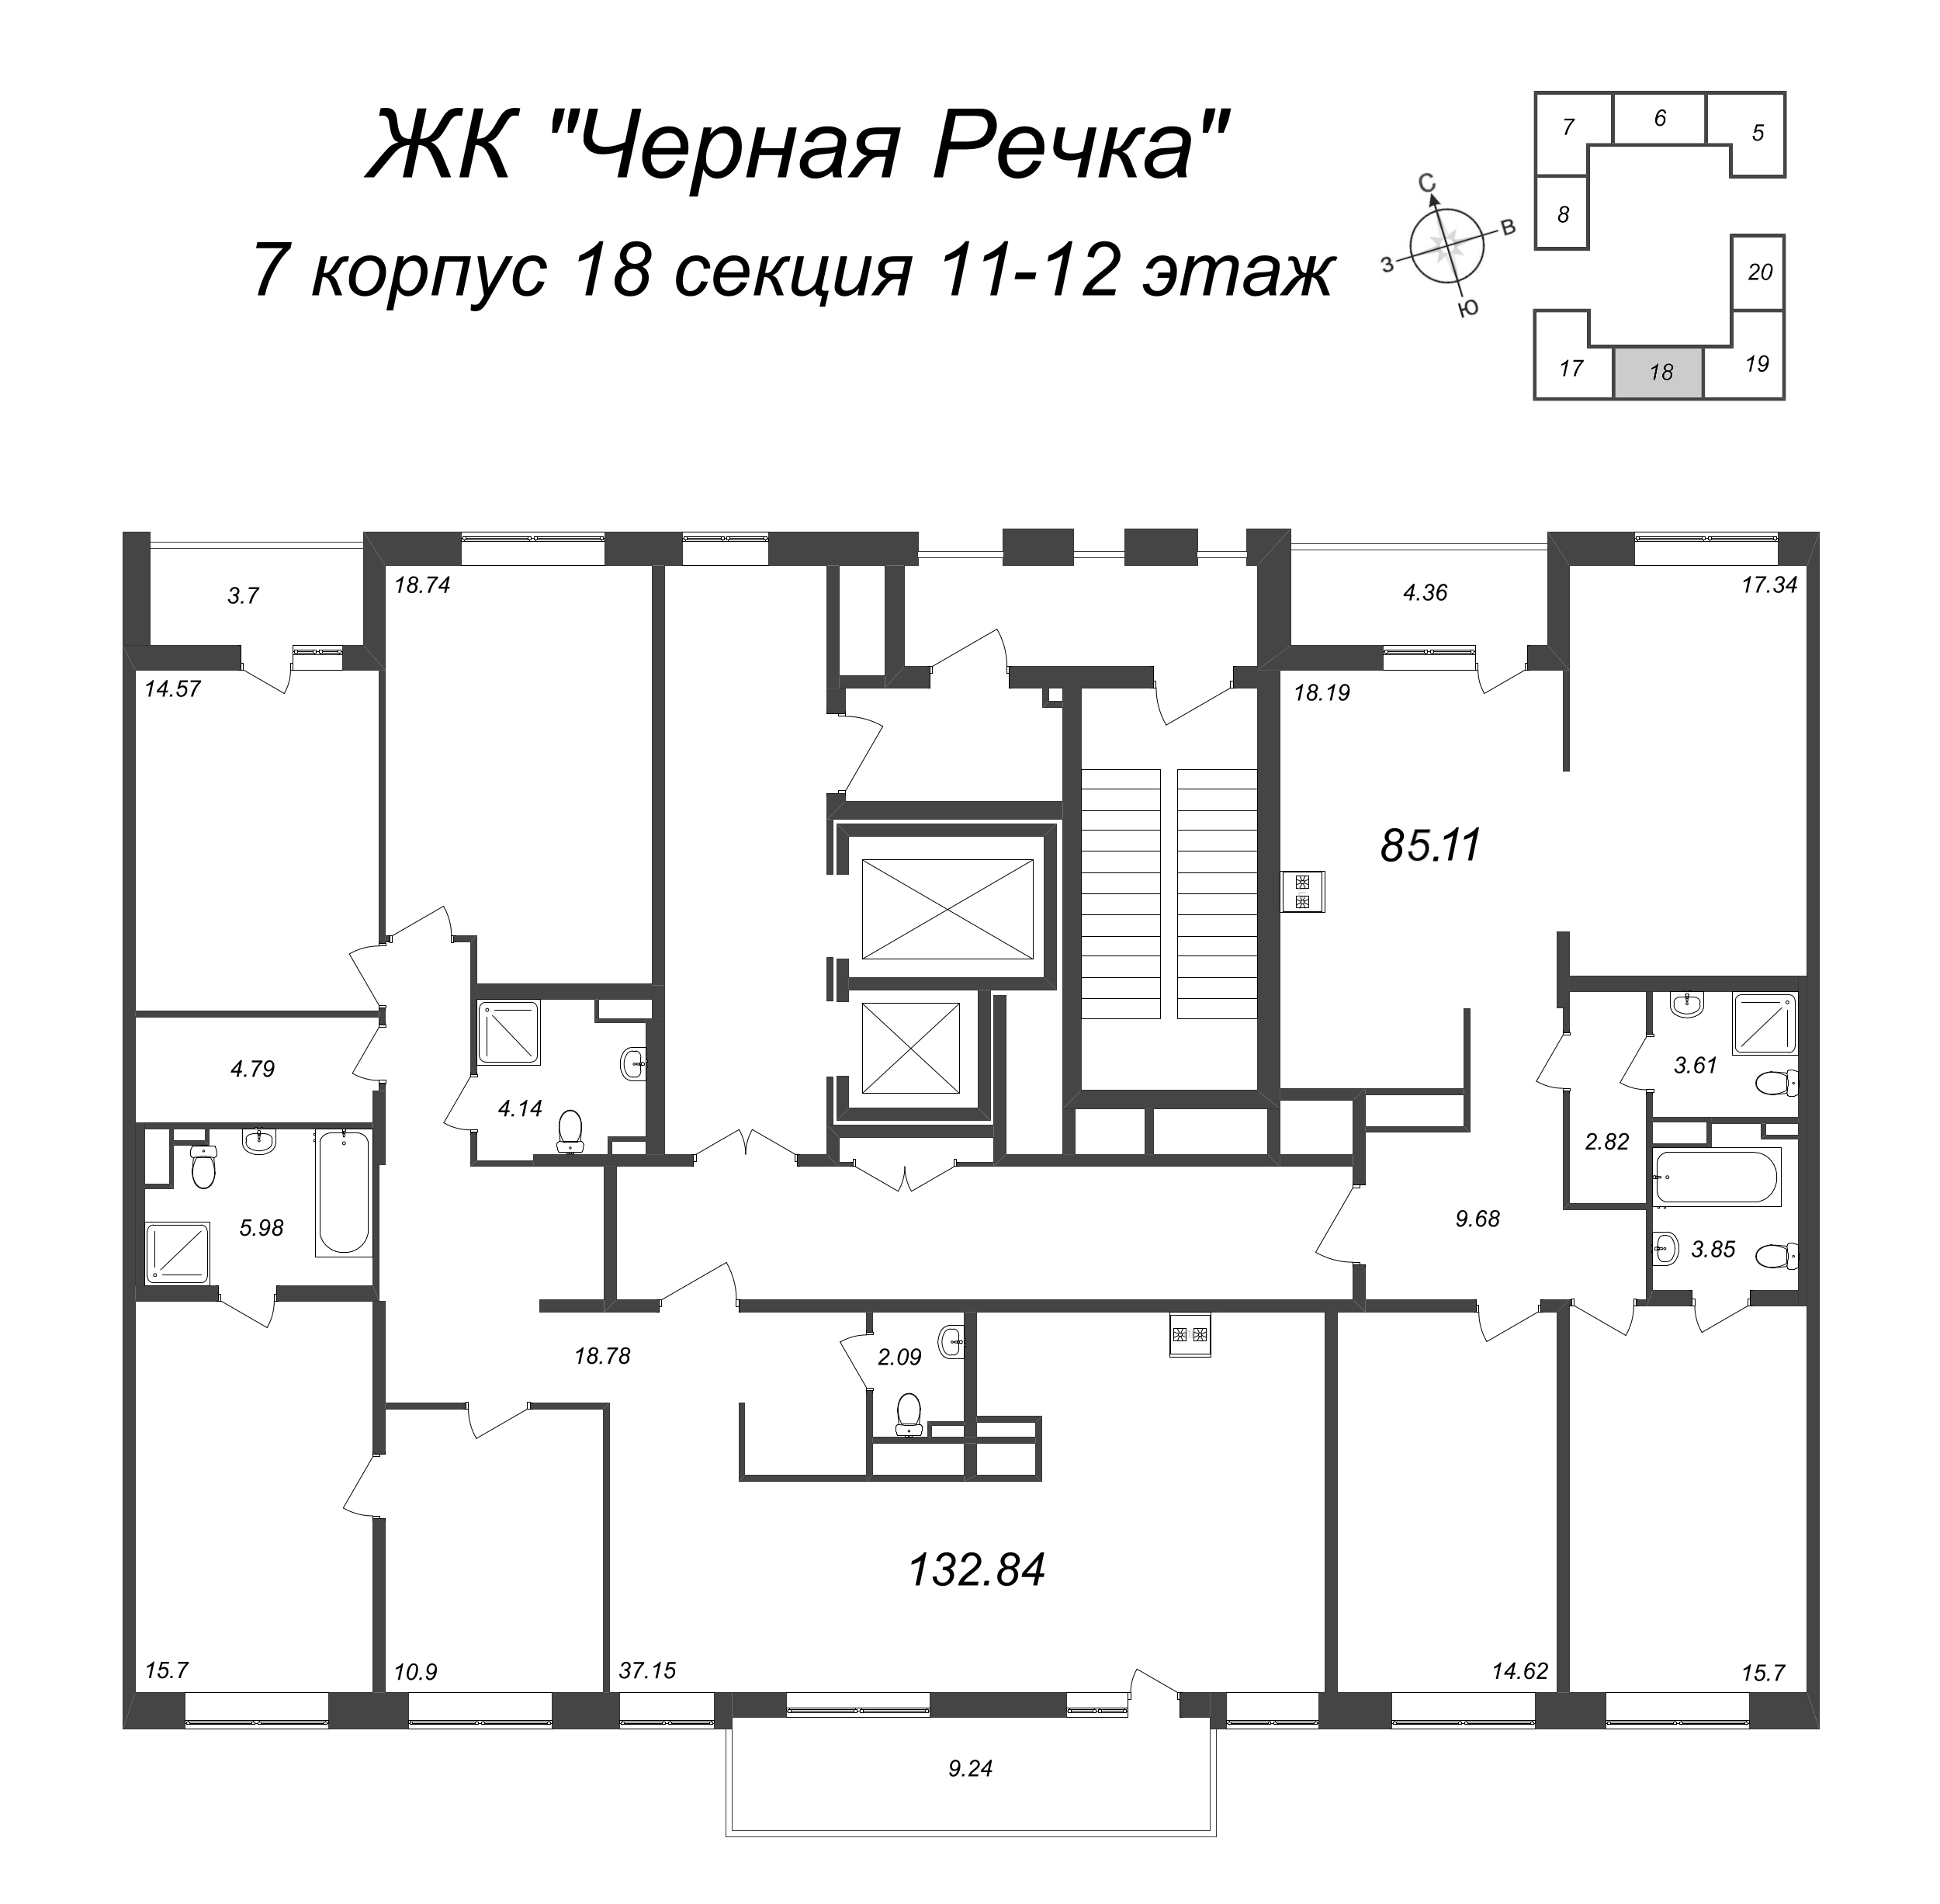 5-комнатная (Евро) квартира, 132.84 м² в ЖК "Чёрная речка от Ильича" - планировка этажа